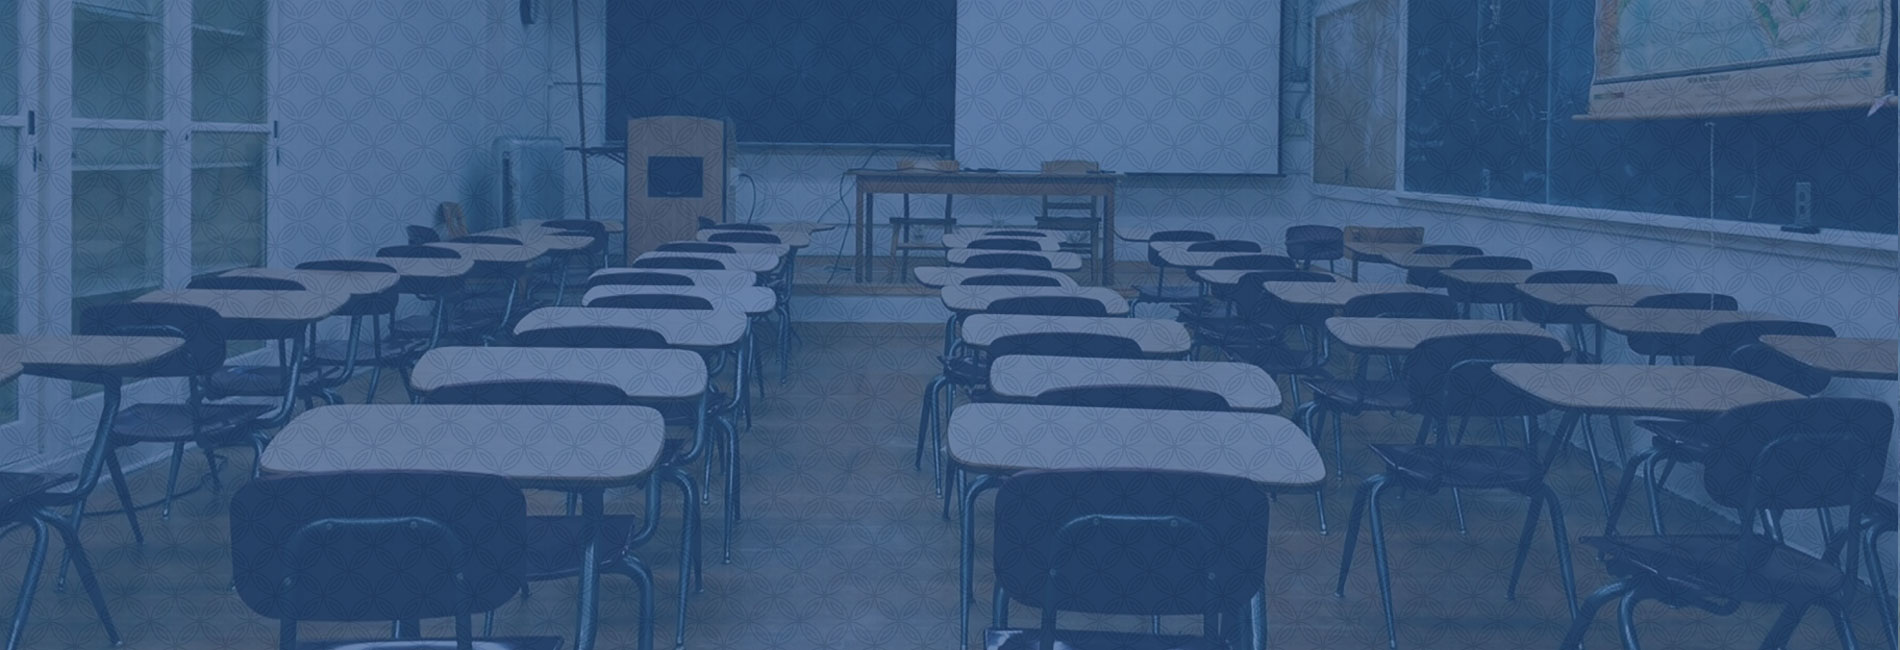 Banner image: empty classroom with desks, blackboard, projector screen